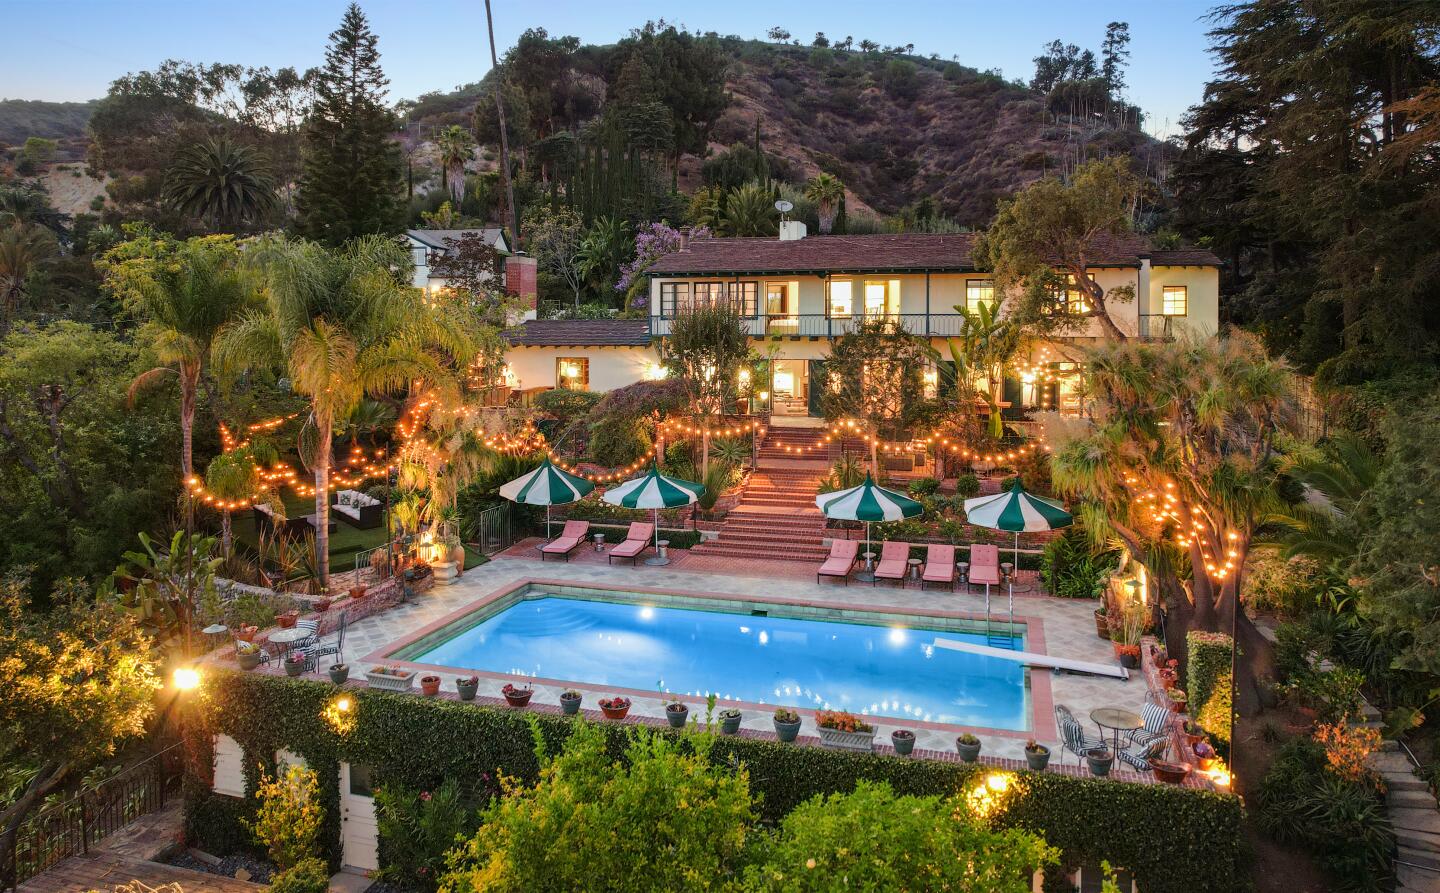 The palm-topped backyard.